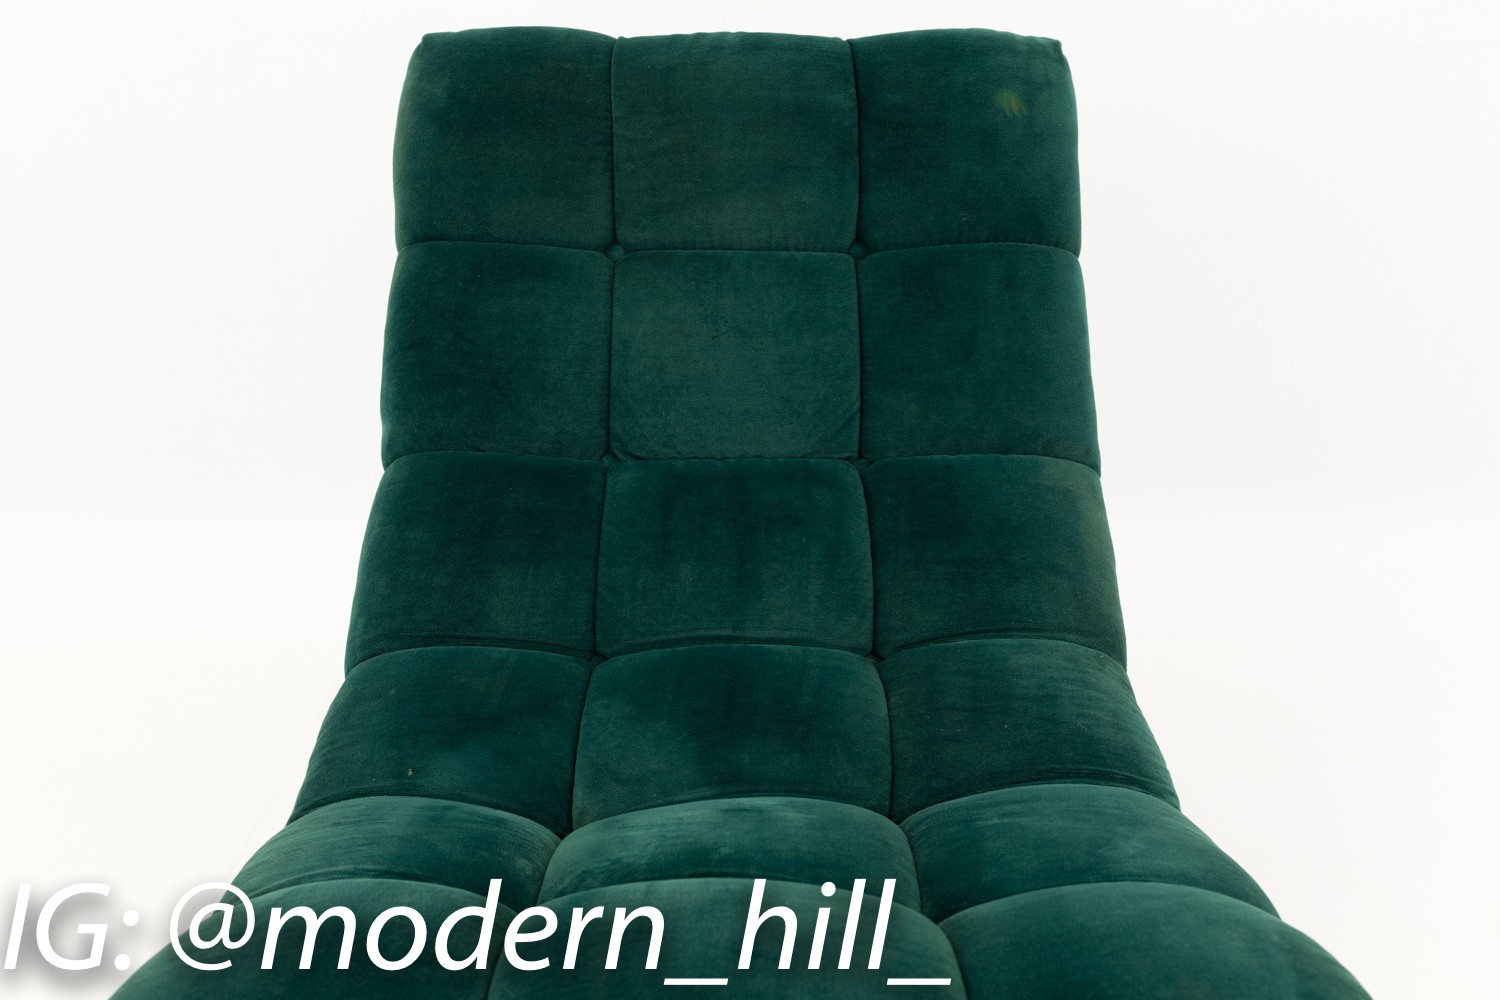 Milo Baughman Mid Century Brass Base Tufted Chaise Lounge Chair